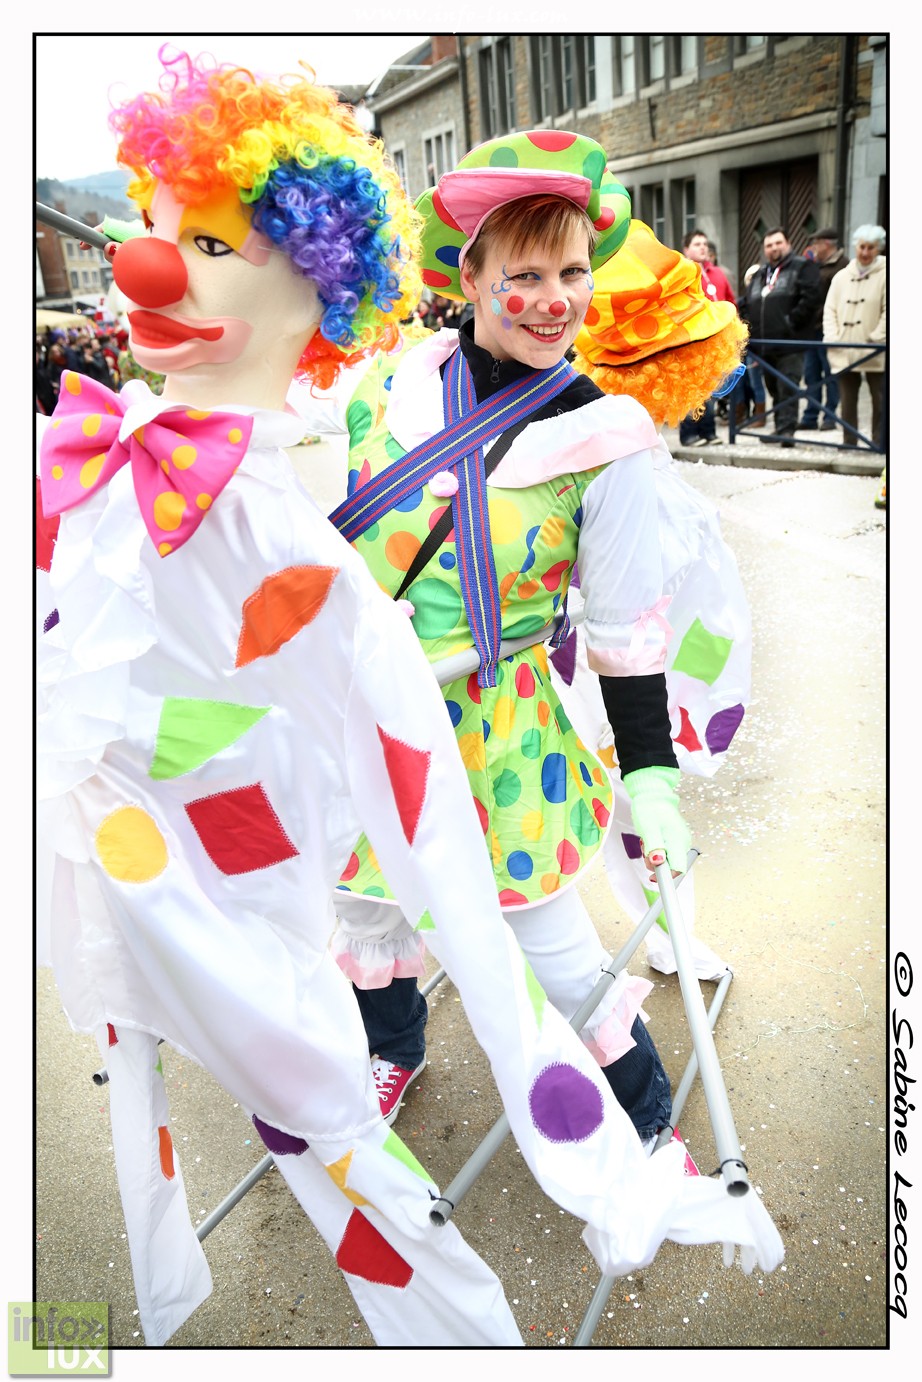 images/stories/PHOTOSREP/La-Roche-en-Ardenne/Carnaval2/Carnaval-larocheb088